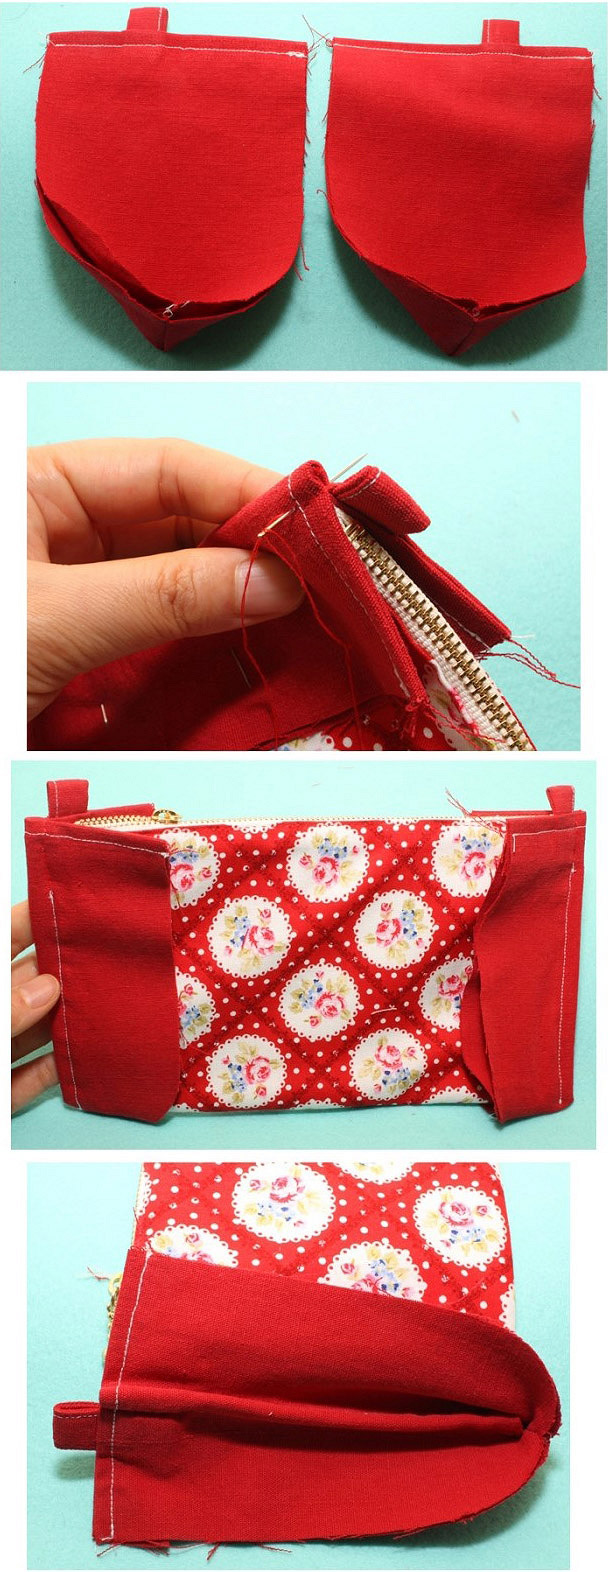 How to sew a Handbag with Turn Locks. Sewing Pattern & DIY Picture Tutorial.  Сумка-клатч с поворотной застежкой. Инструкция по шитью.